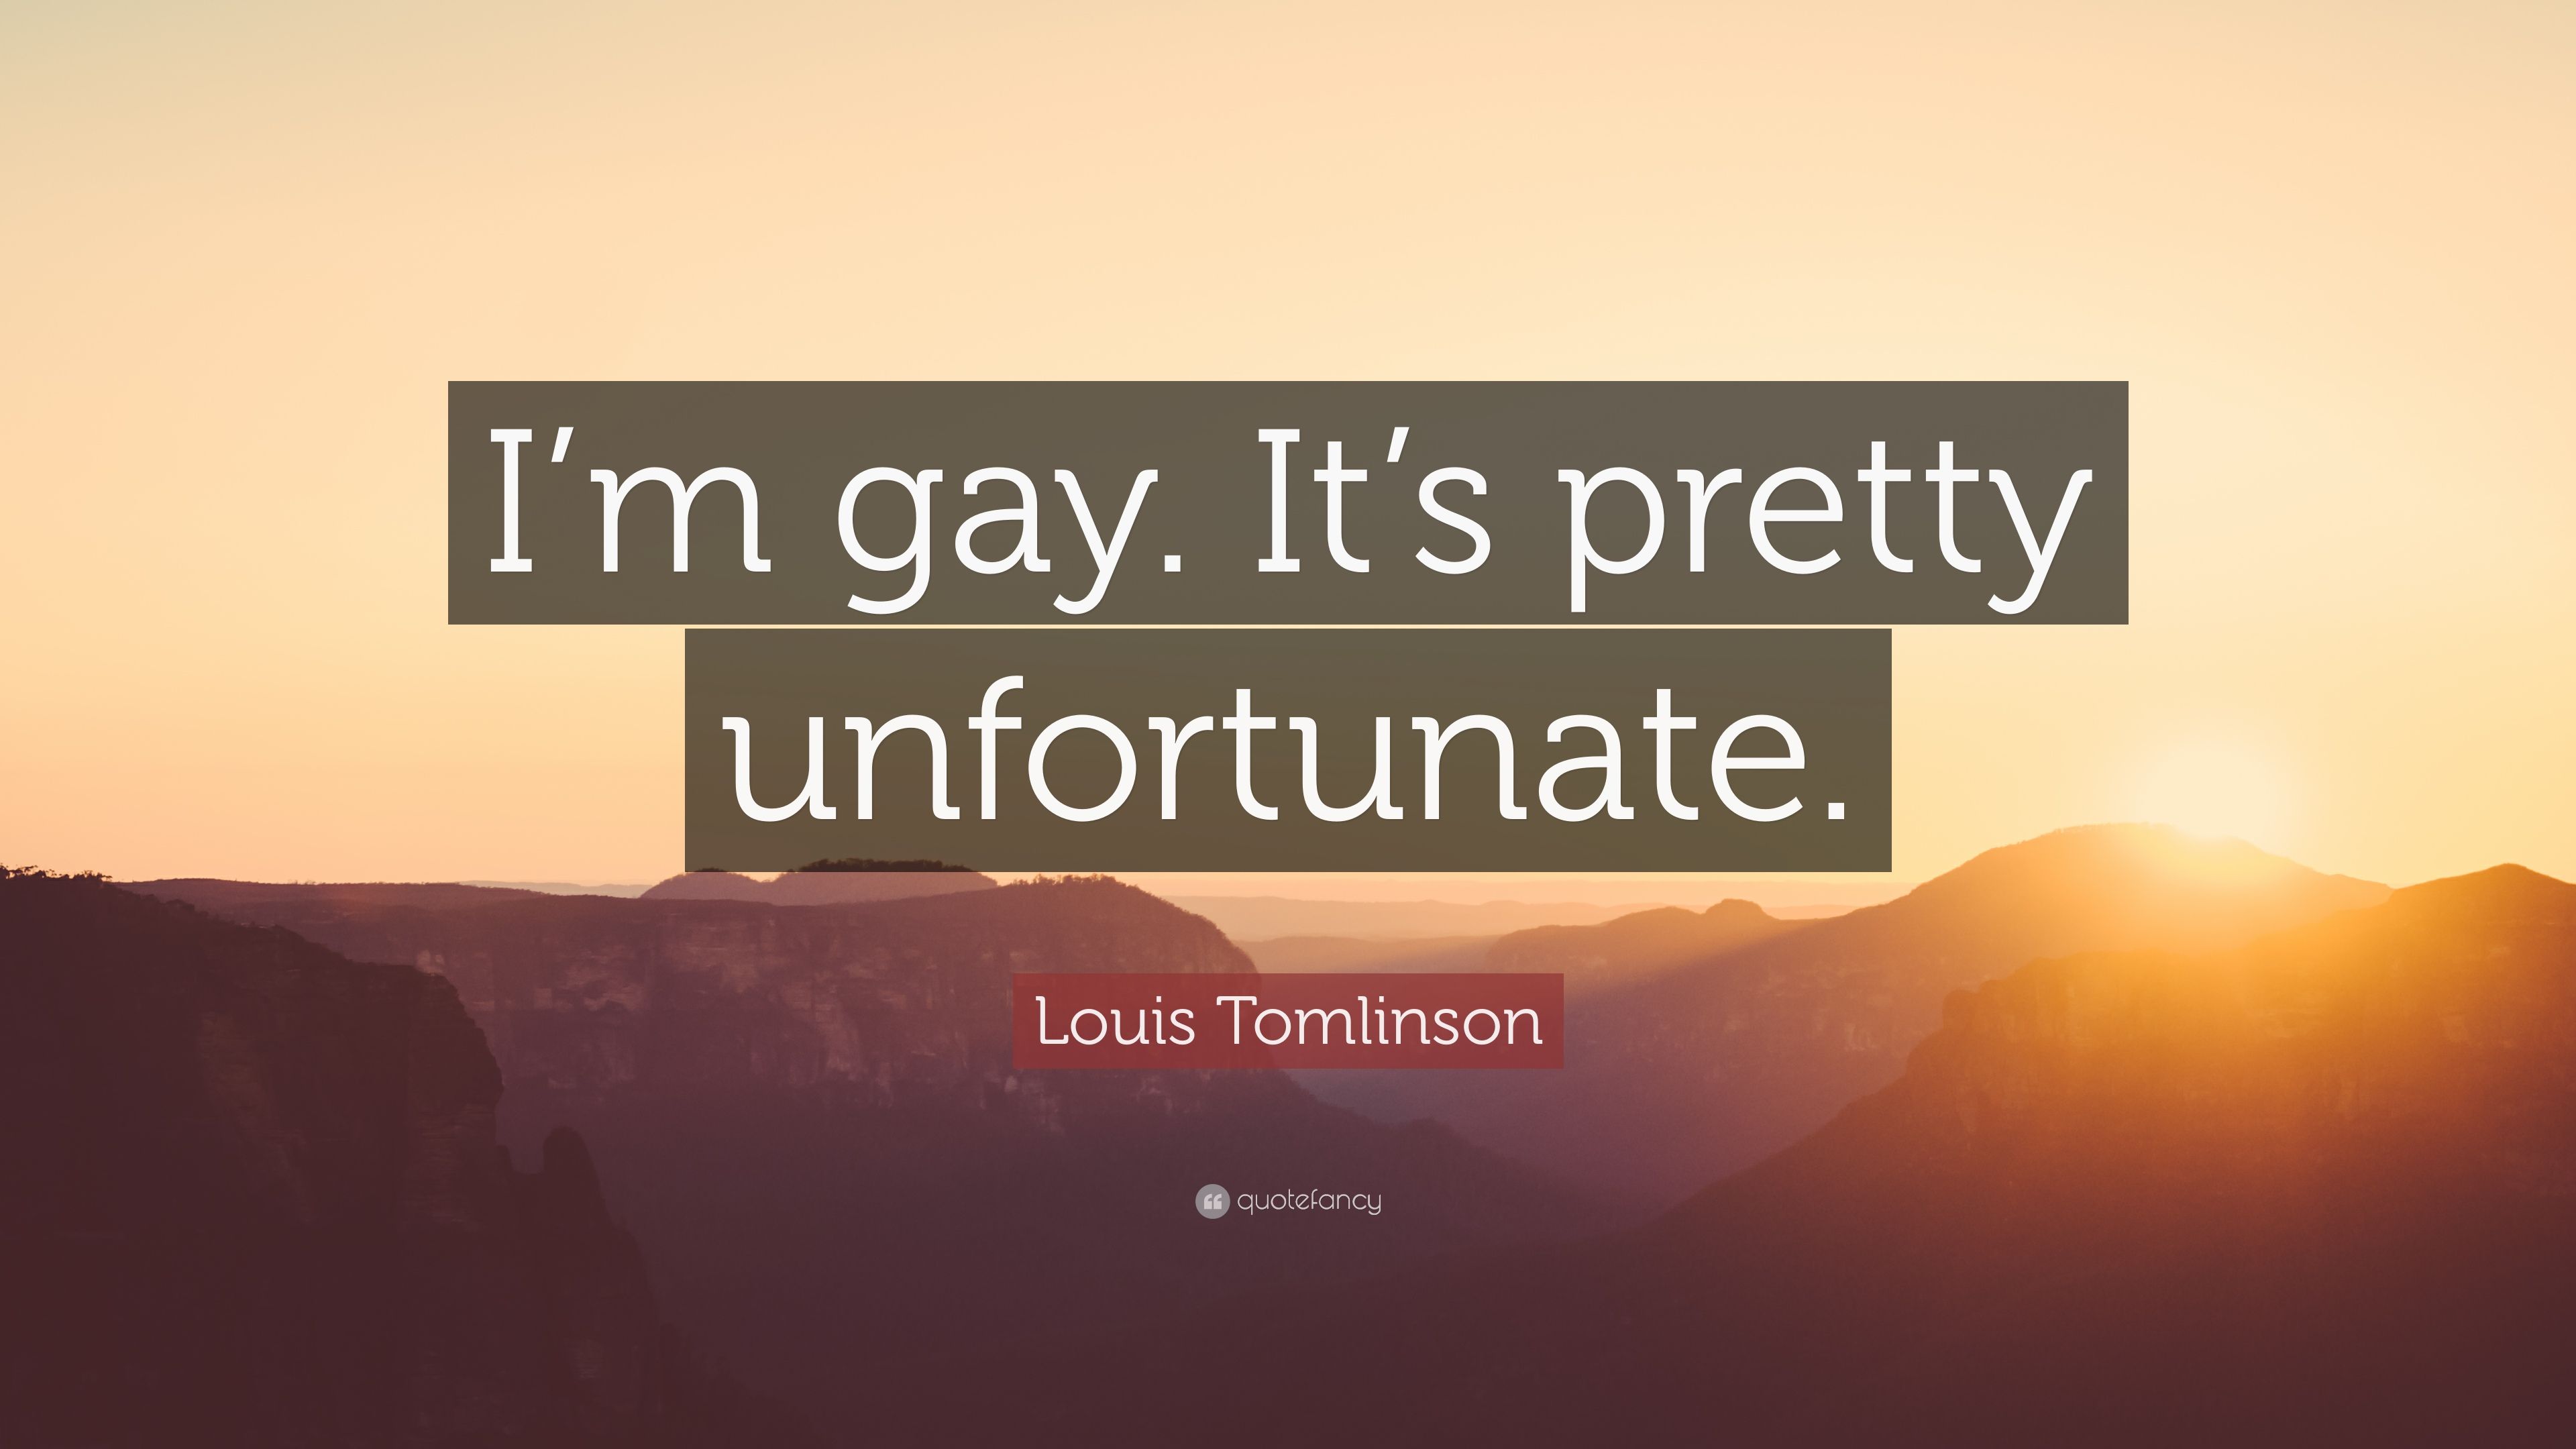 Louis Tomlinson Quote: “I'm gay. It's pretty unfortunate.”